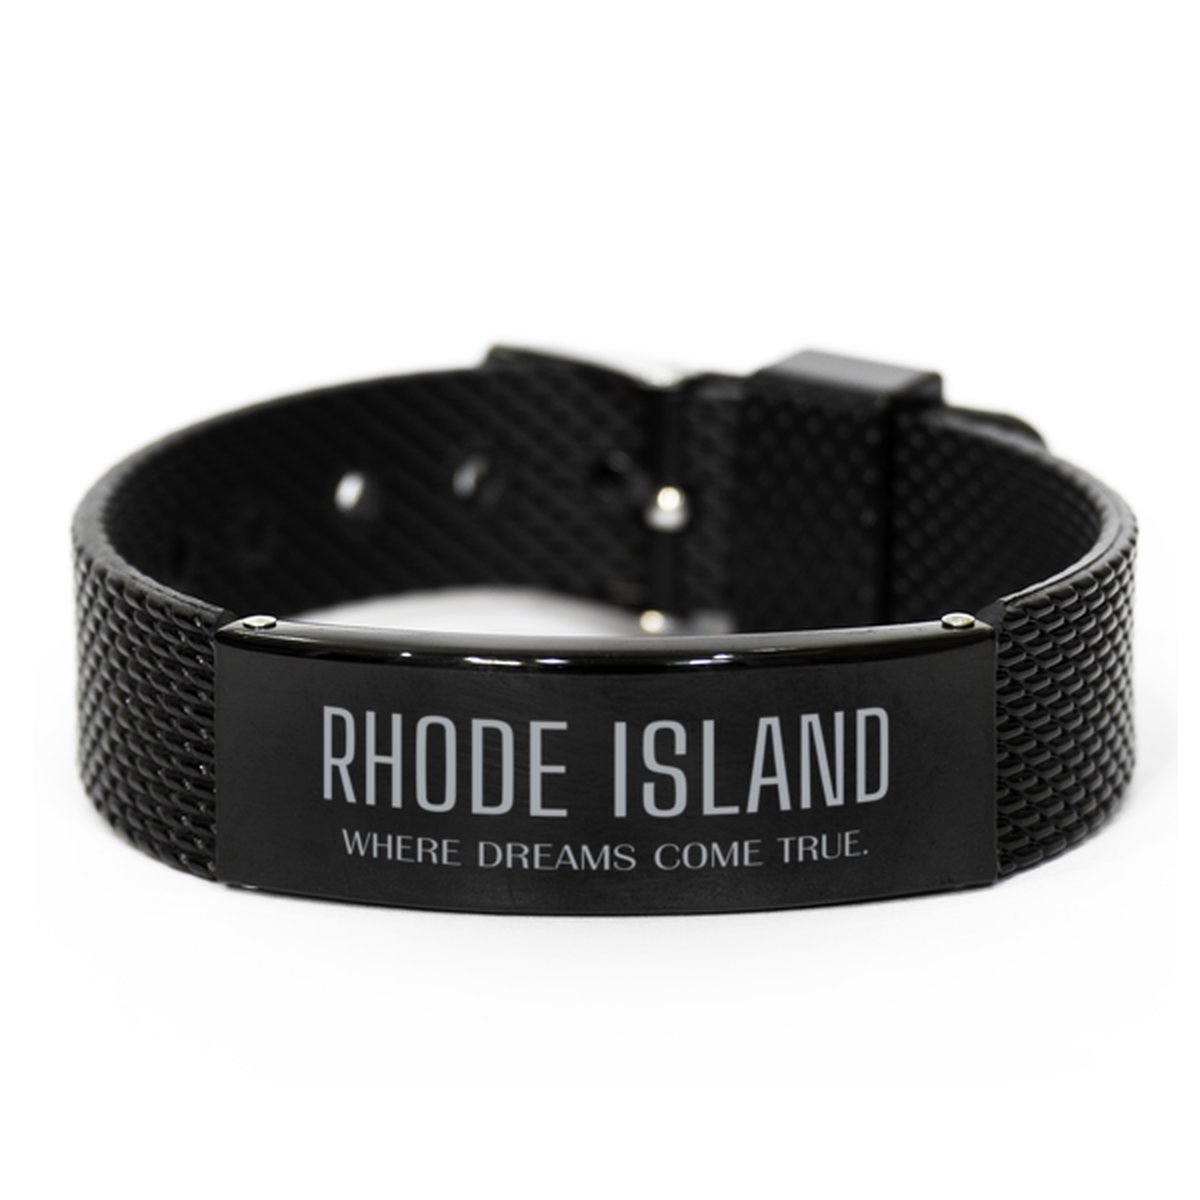 Love Rhode Island State Black Shark Mesh Bracelet, Rhode Island Where dreams come true, Birthday Inspirational Gifts For Rhode Island Men, Women, Friends